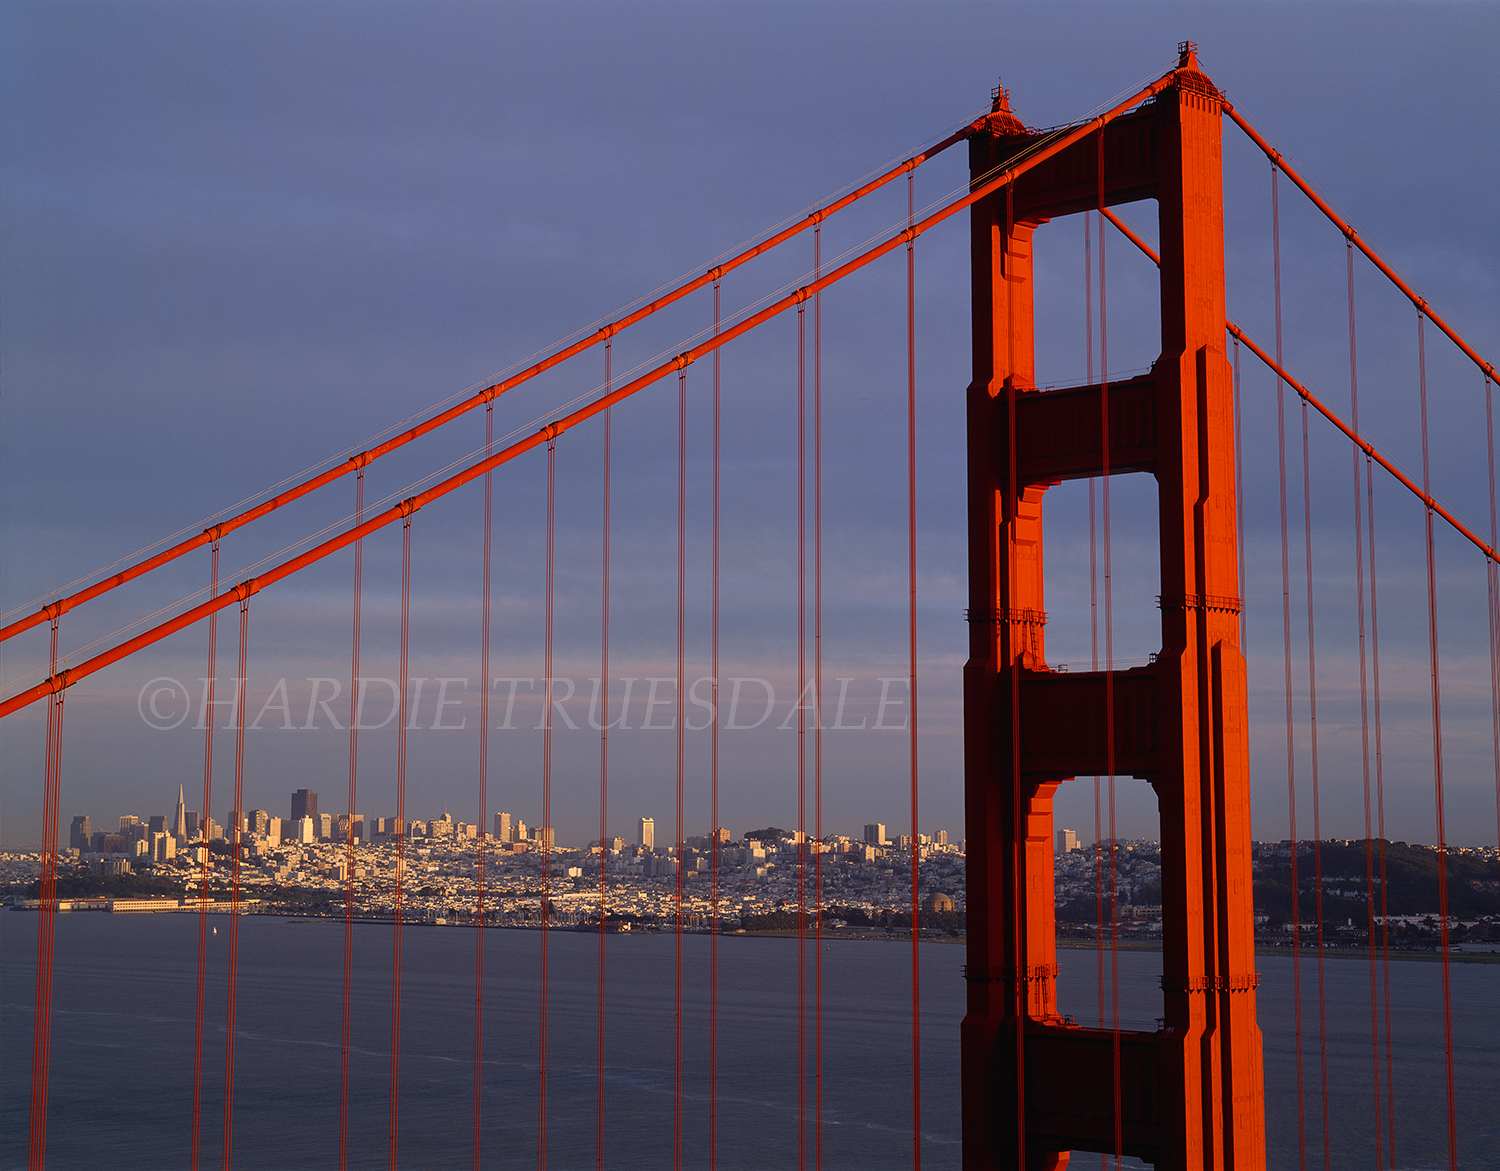 CA#2 "Golden Gate, San Francisco"